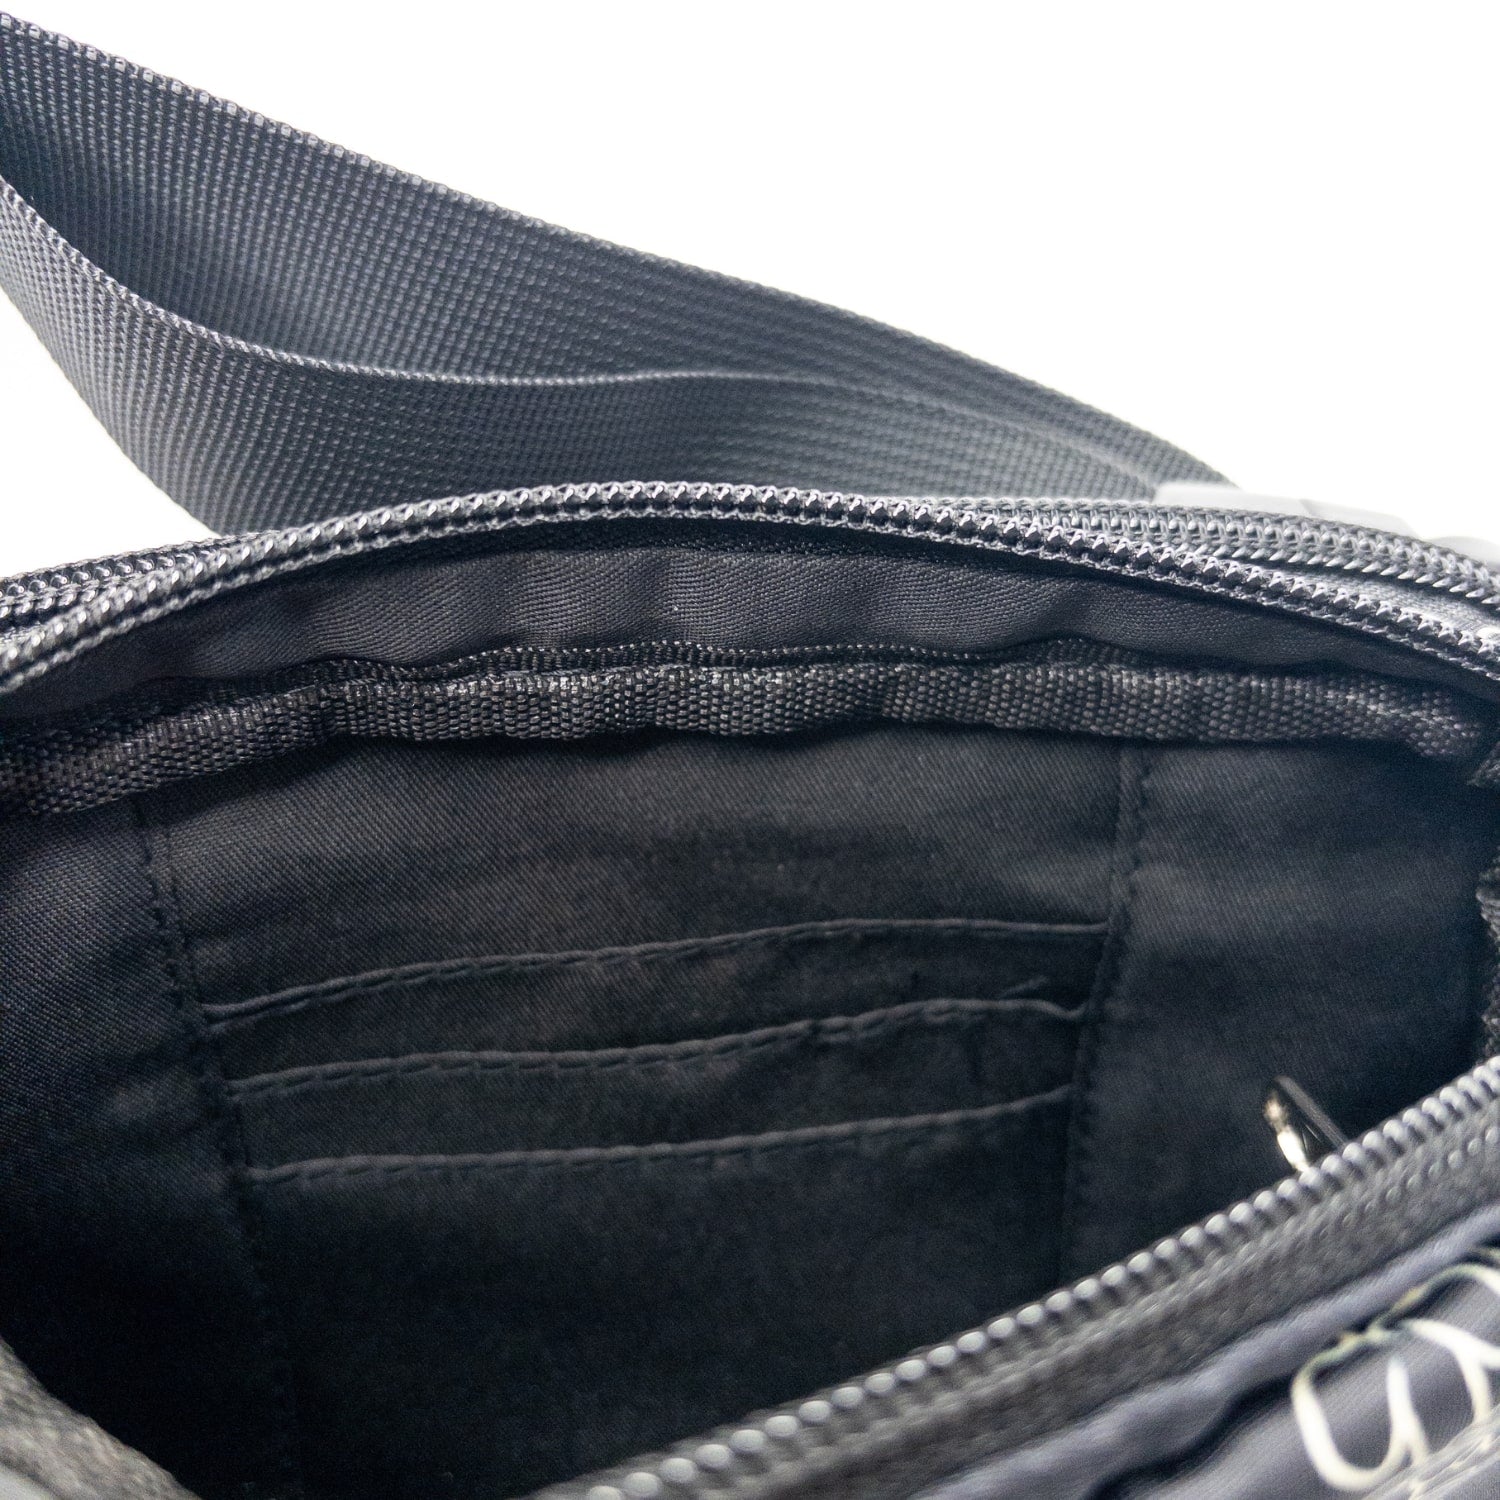 fanny pack, waist bag, belt bag, chest bag, hip pack, crossbody in pua kenikeni lei on black from Puakenikeni Designs top view 3 card slots